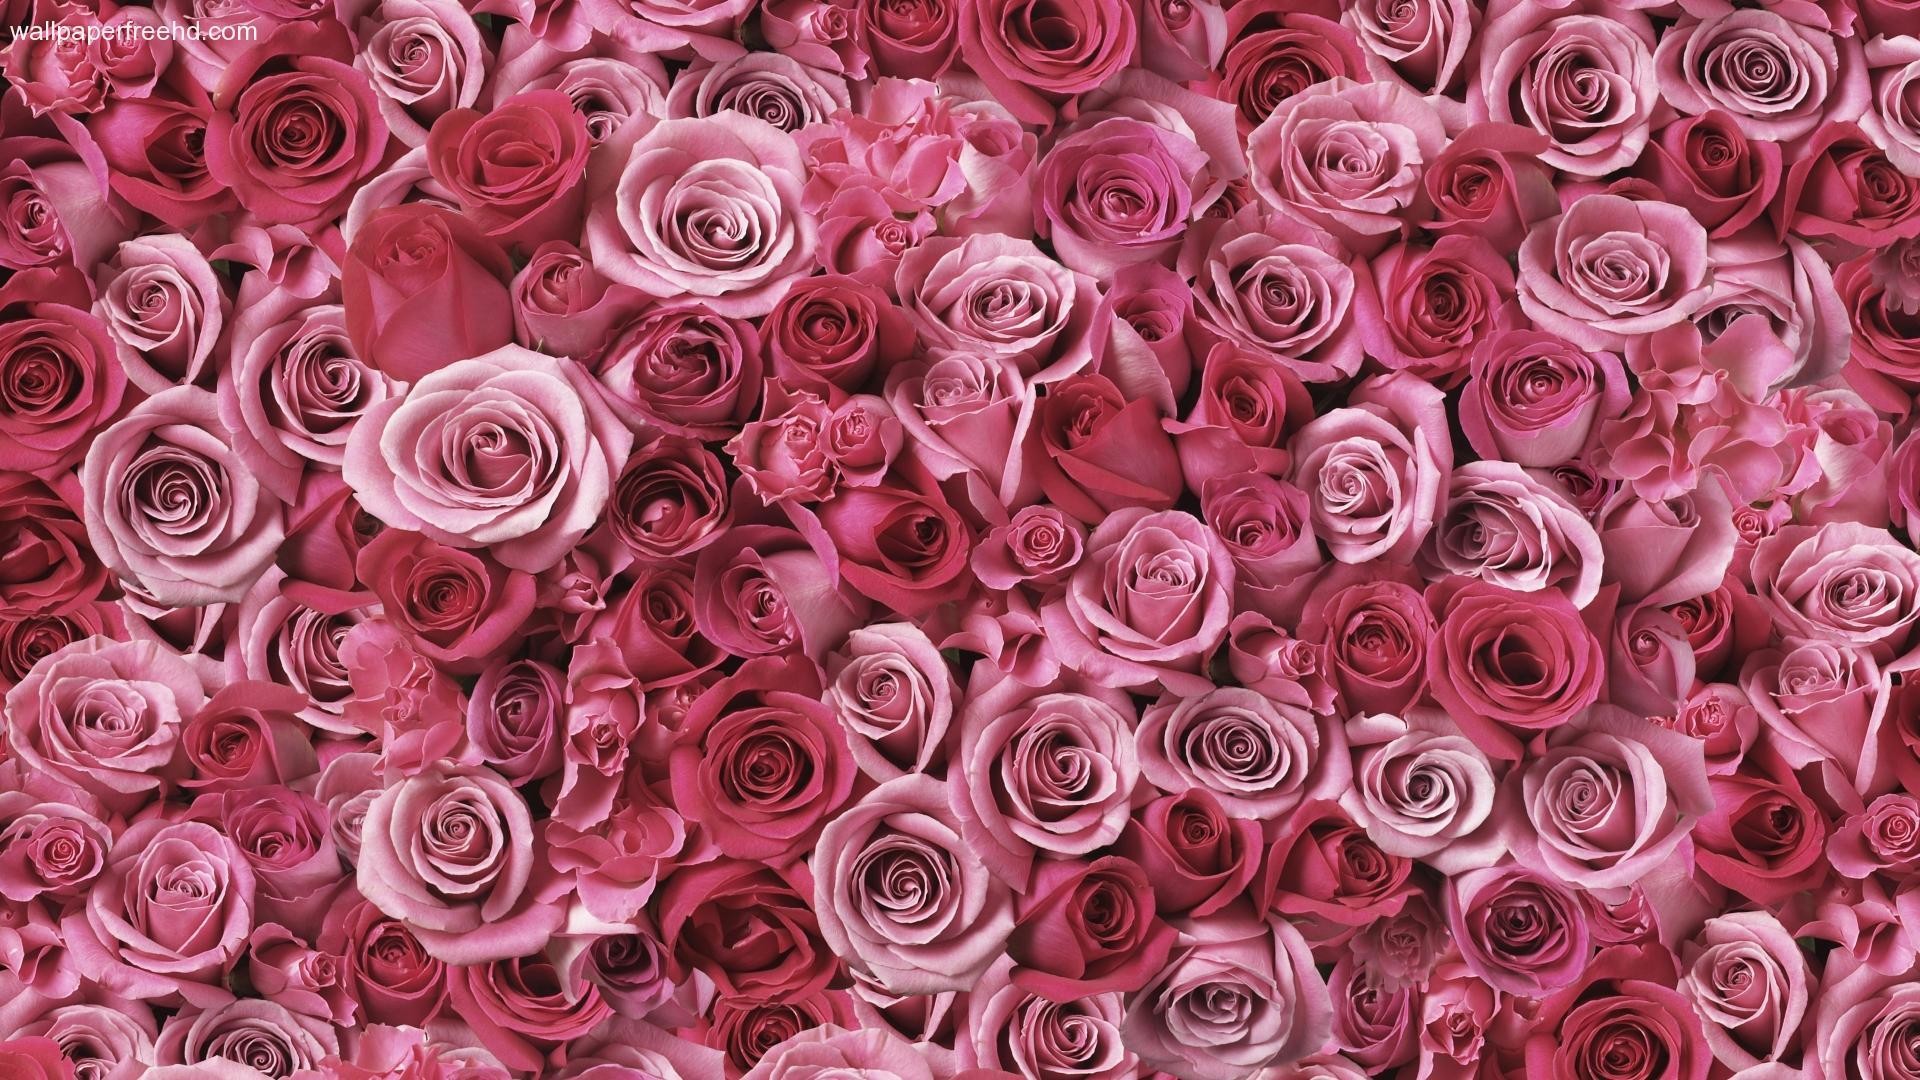 1920x1080 Roses Tumblr Background